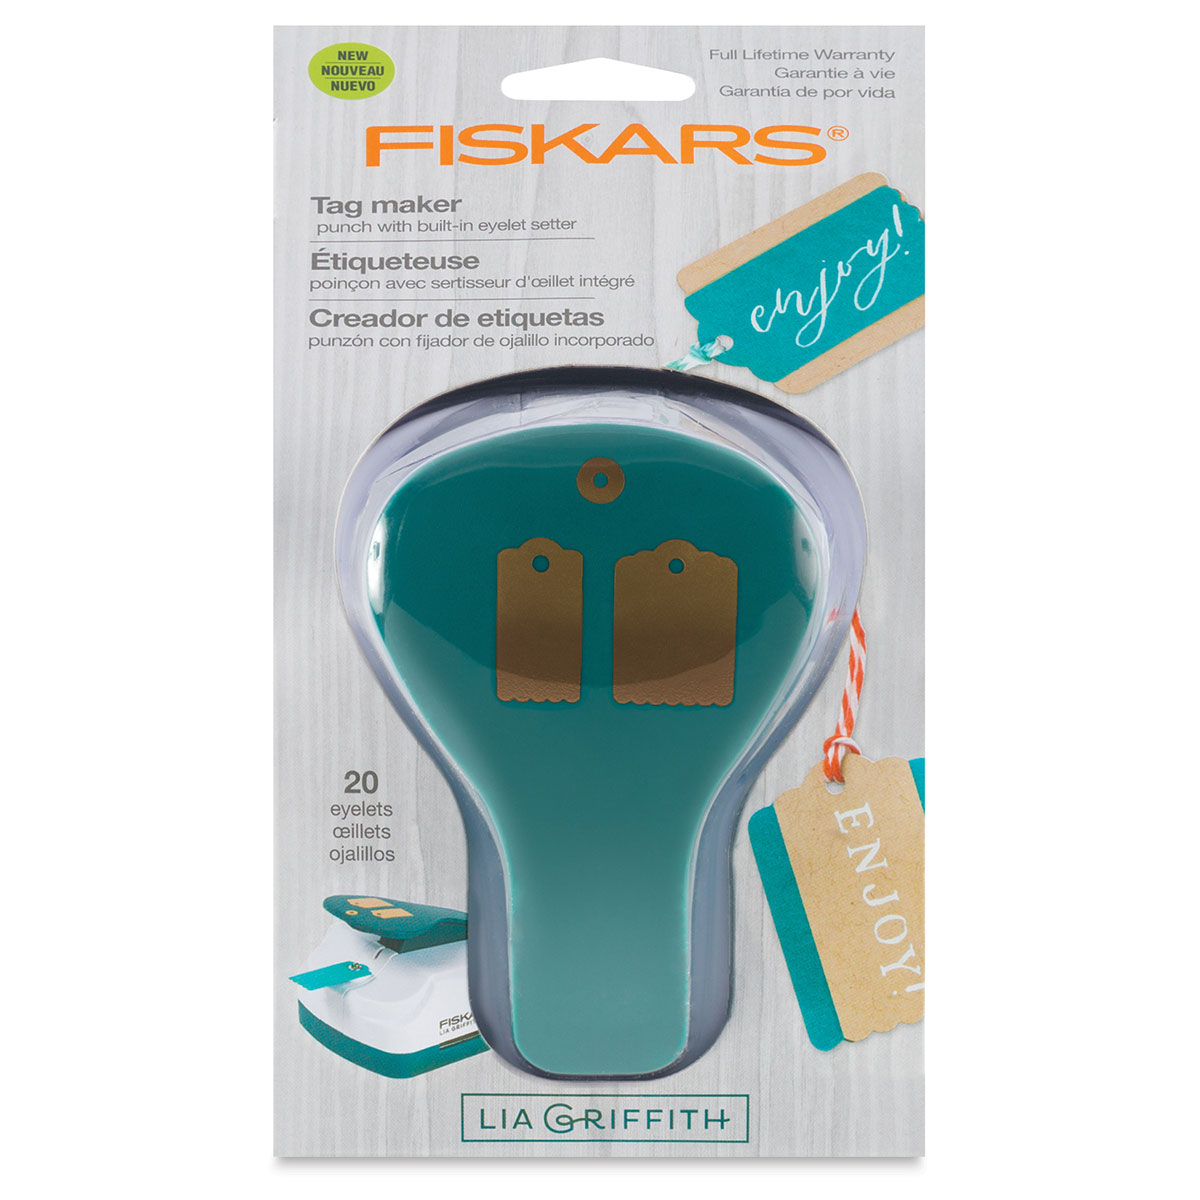  Fiskars Simple Tag Maker with Built-in Eyelet Setter